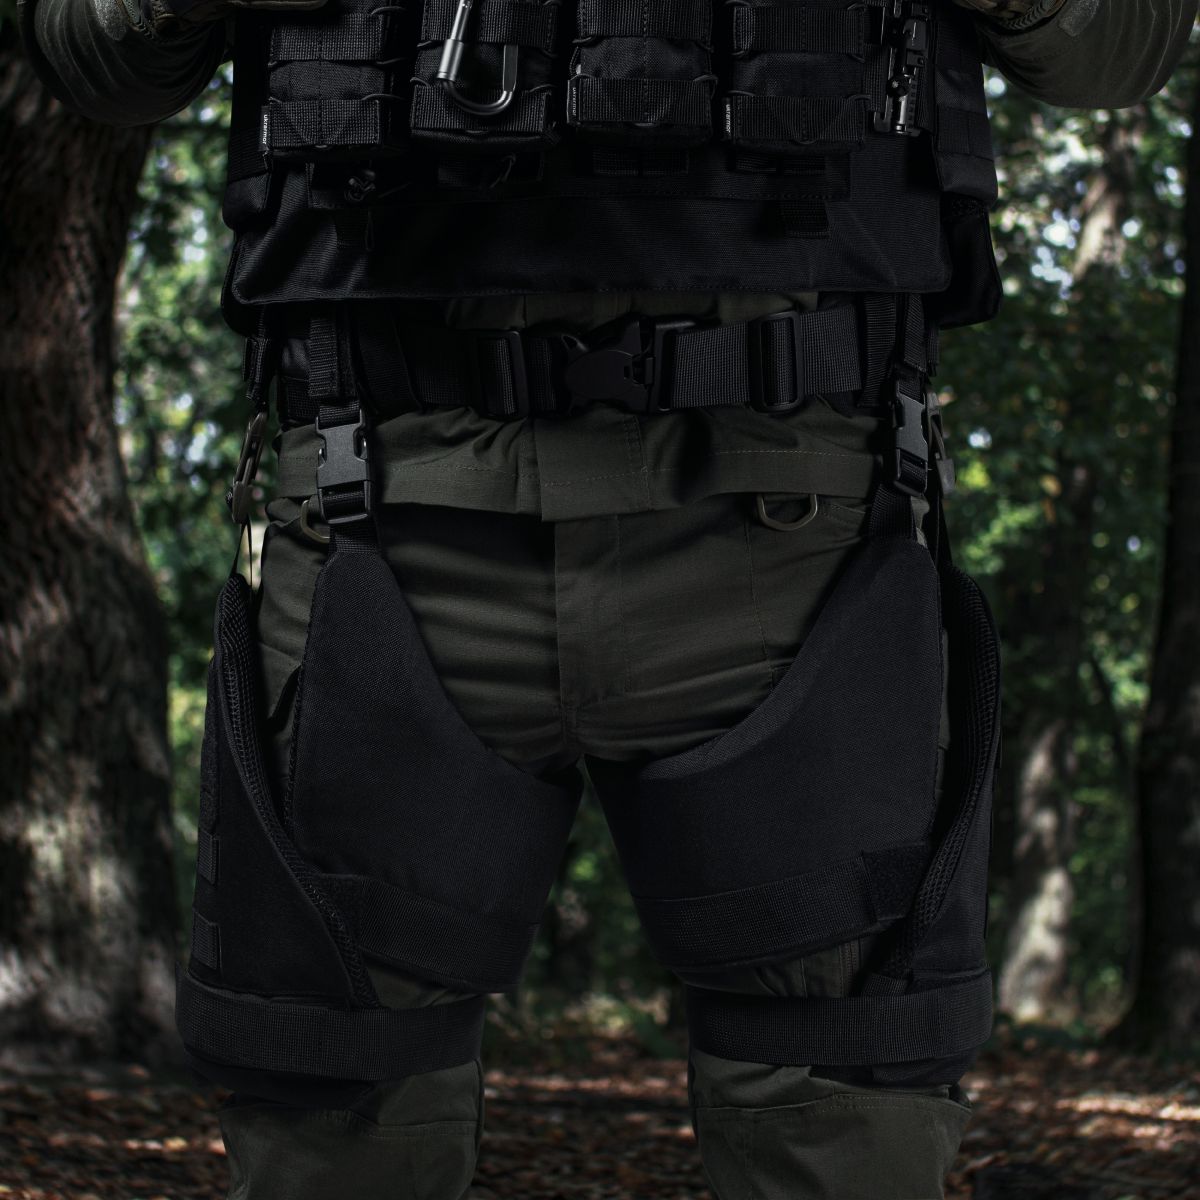 Бронекостюм A.T.A.S. (Advanced Tactical Armor Suit) Level I. Клас захисту – 1. Чорний. S/M 9